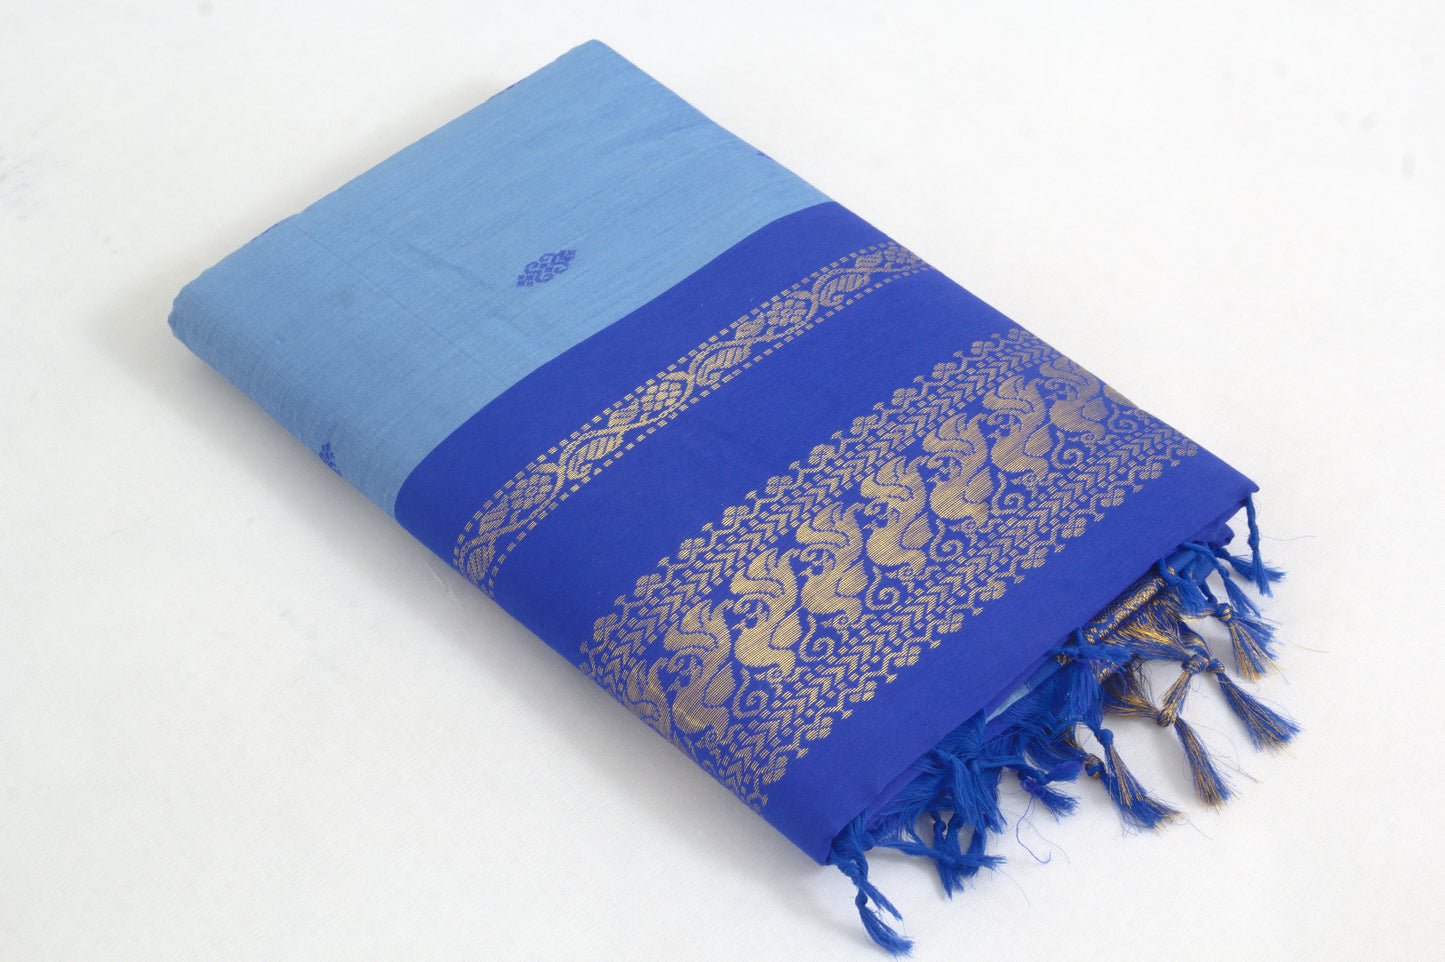 Elampillai Kalyani Cotton Sarees – Glacier body with Cerulean blue border - 100% Cotton Sarees – Perfect for all occasions – P000262